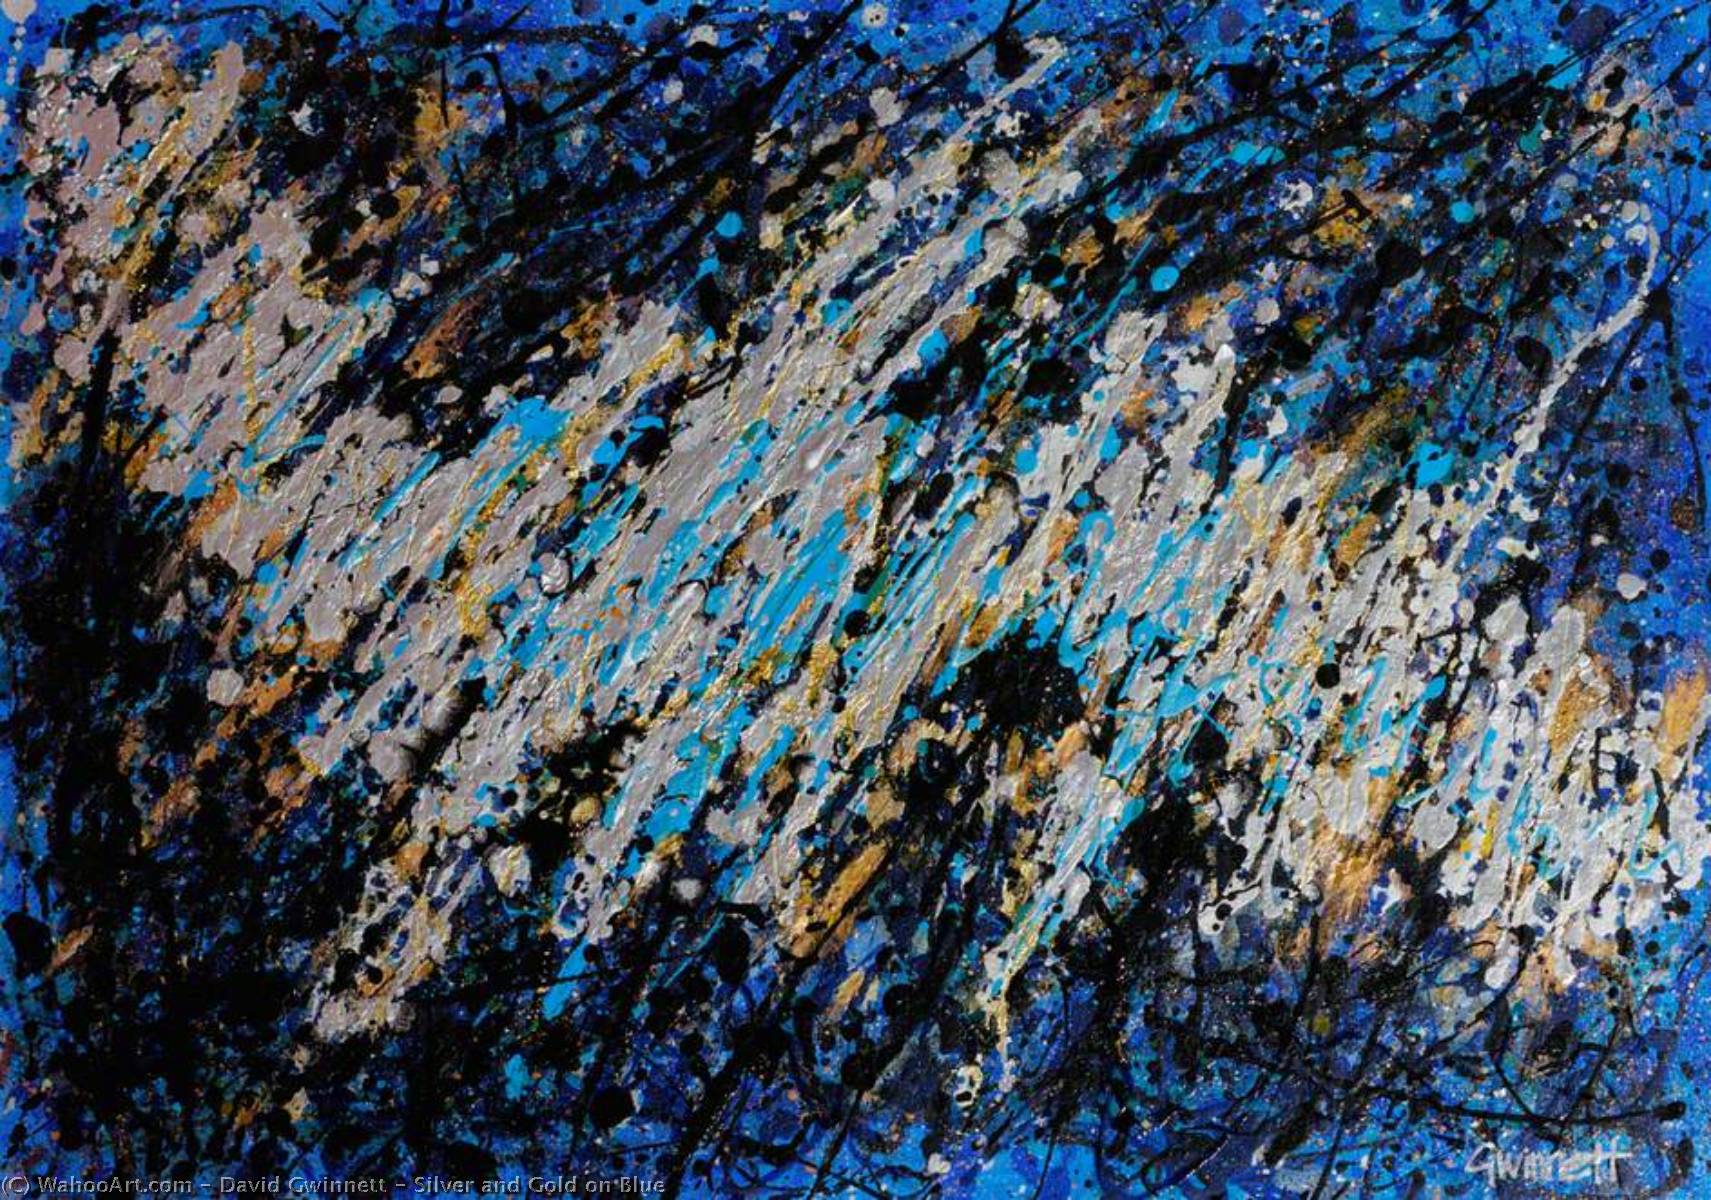 Silver and Gold on Blue by David Gwinnett David Gwinnett | ArtsDot.com